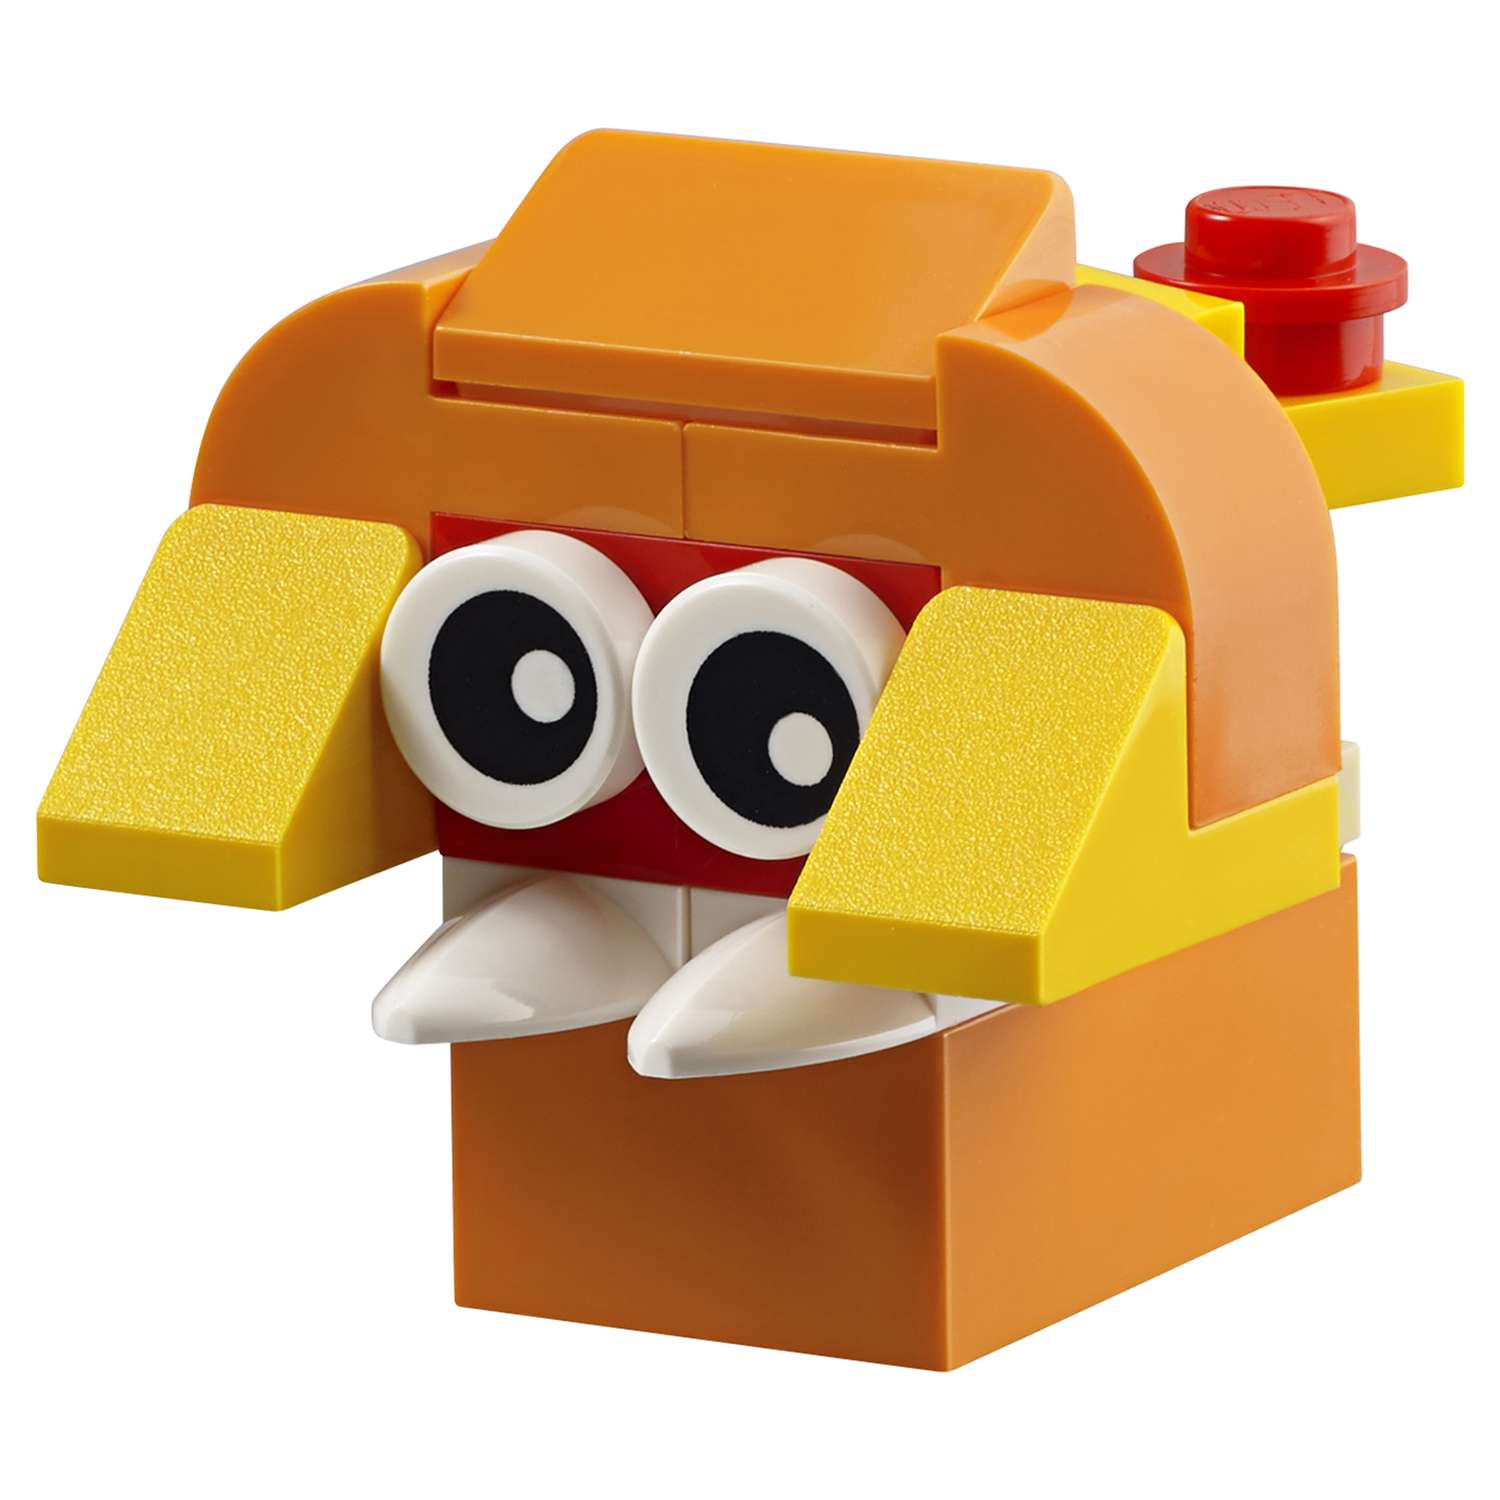 Конструктор LEGO Classic Оранжевый набор для творчества (10709) - фото 7